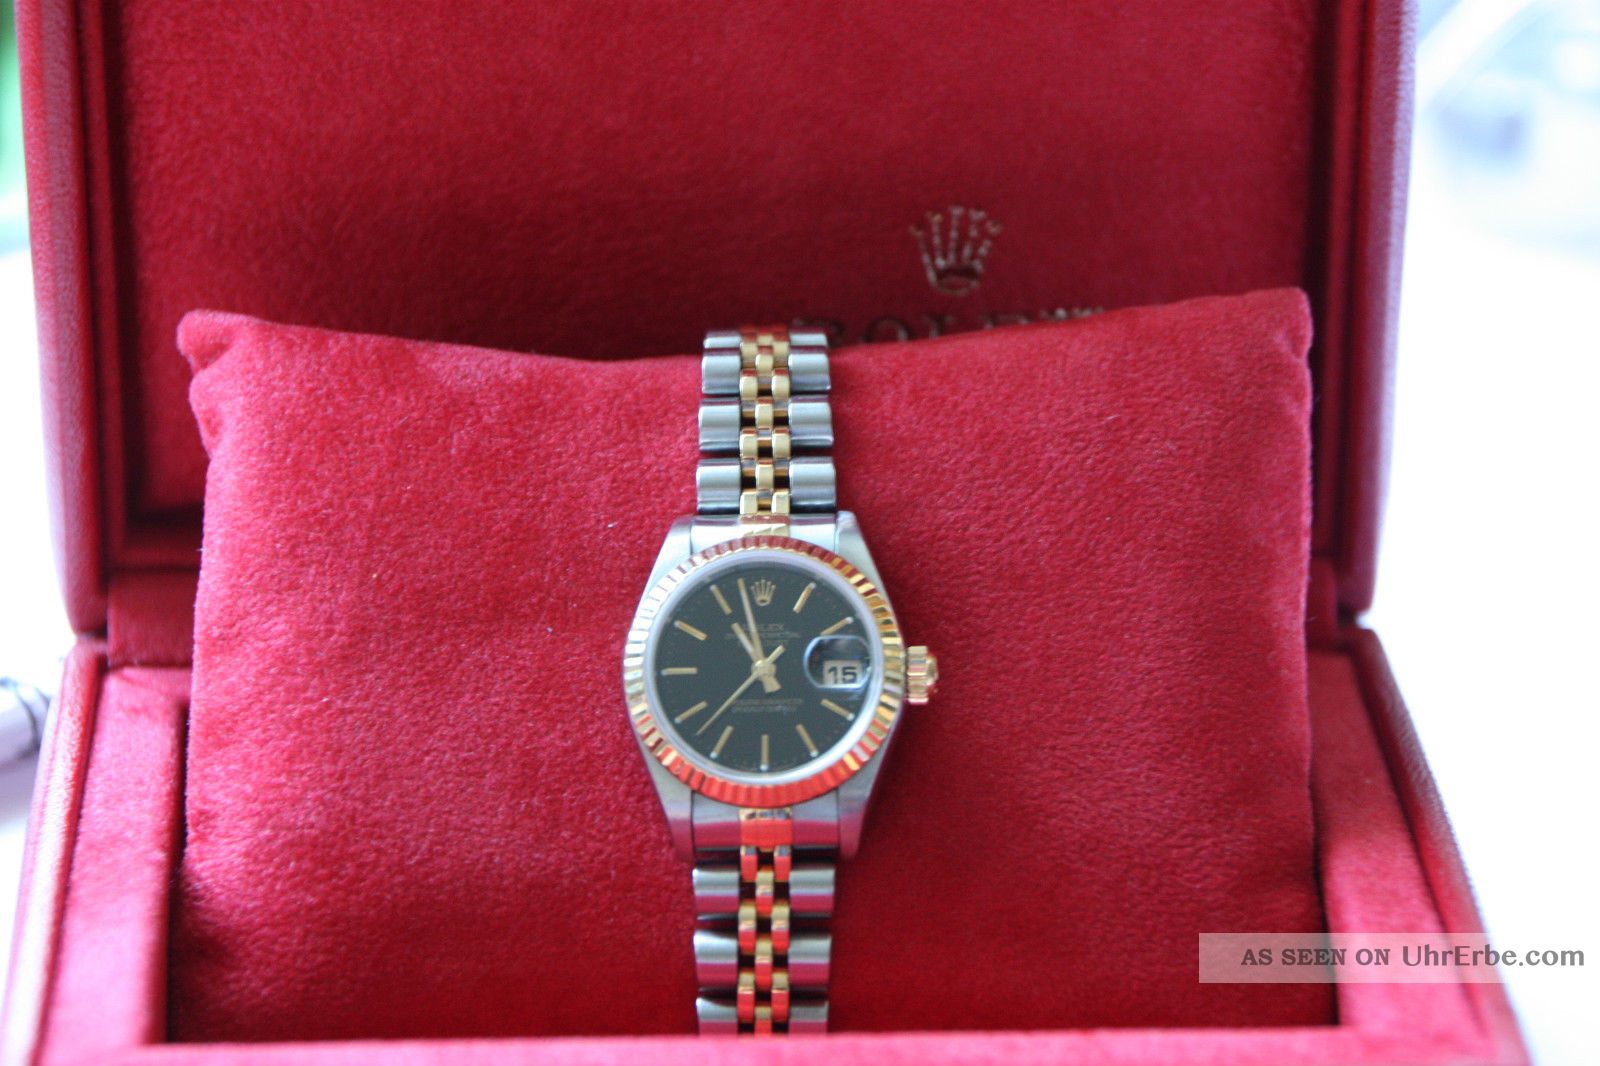 Rolex Damenuhr Modell Lady Date Just Armbanduhren Bild